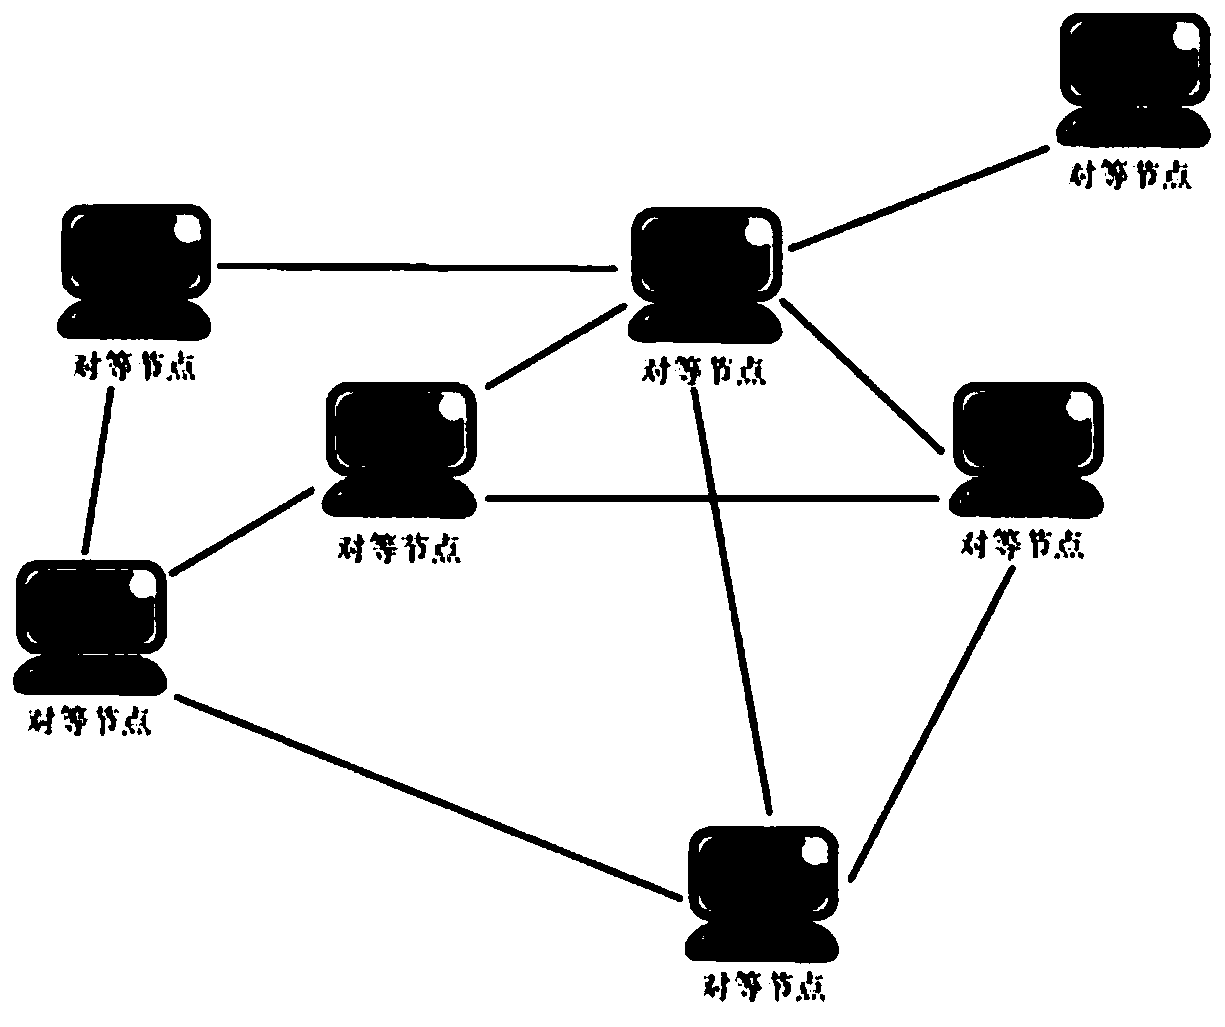 P2P streaming media node selection method based on greedy algorithm